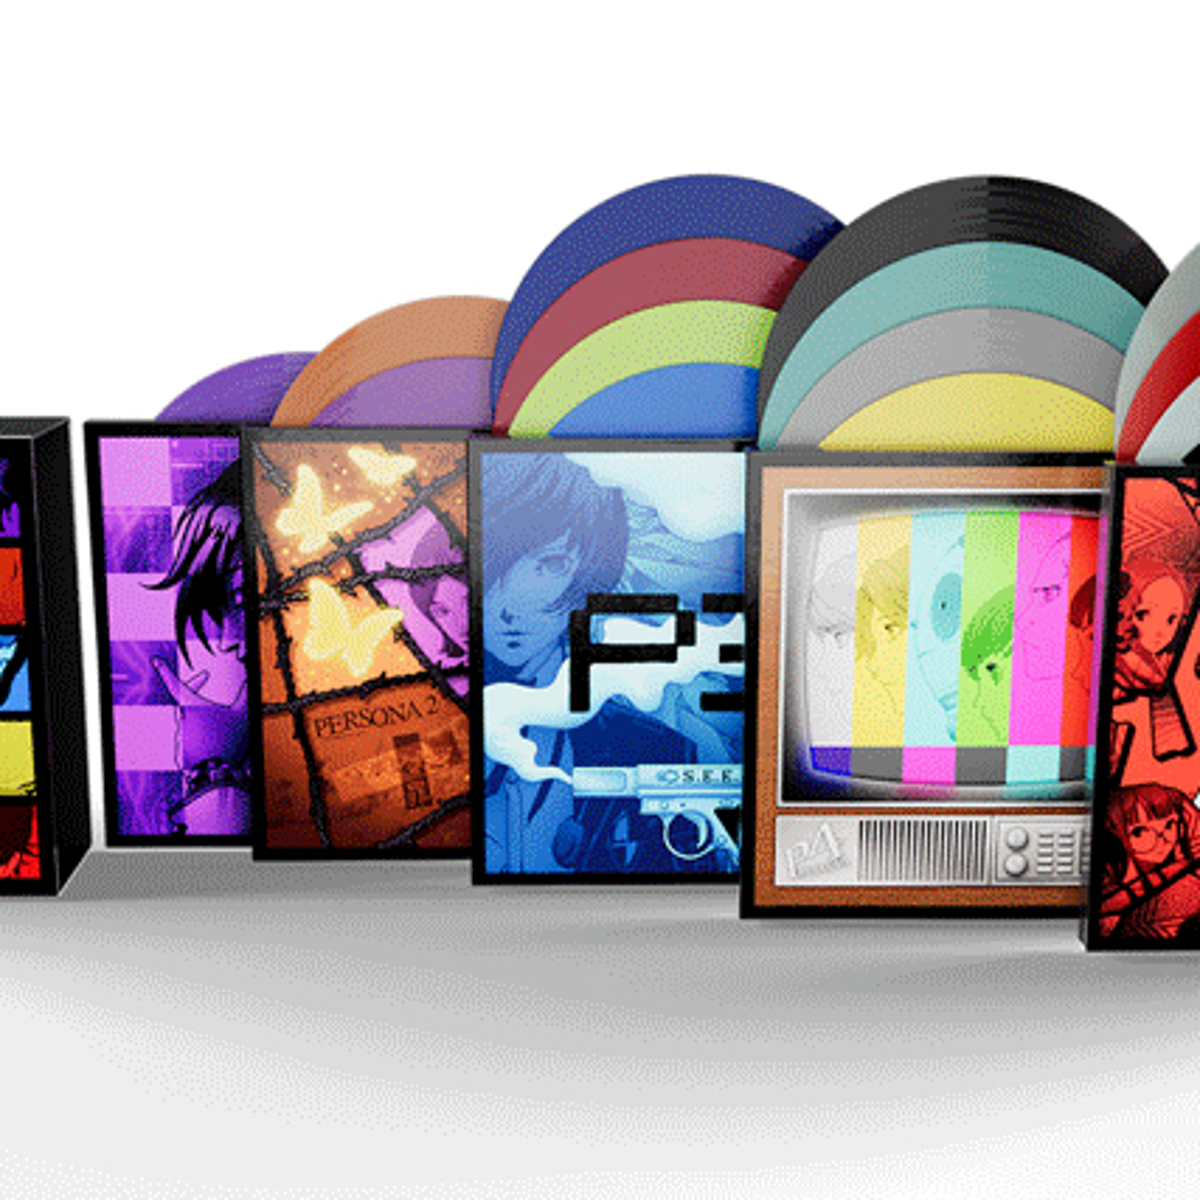 Raffinere konstant Skole lærer Atlus celebrates 25 years of Persona with this new $400 vinyl boxset |  Eurogamer.net